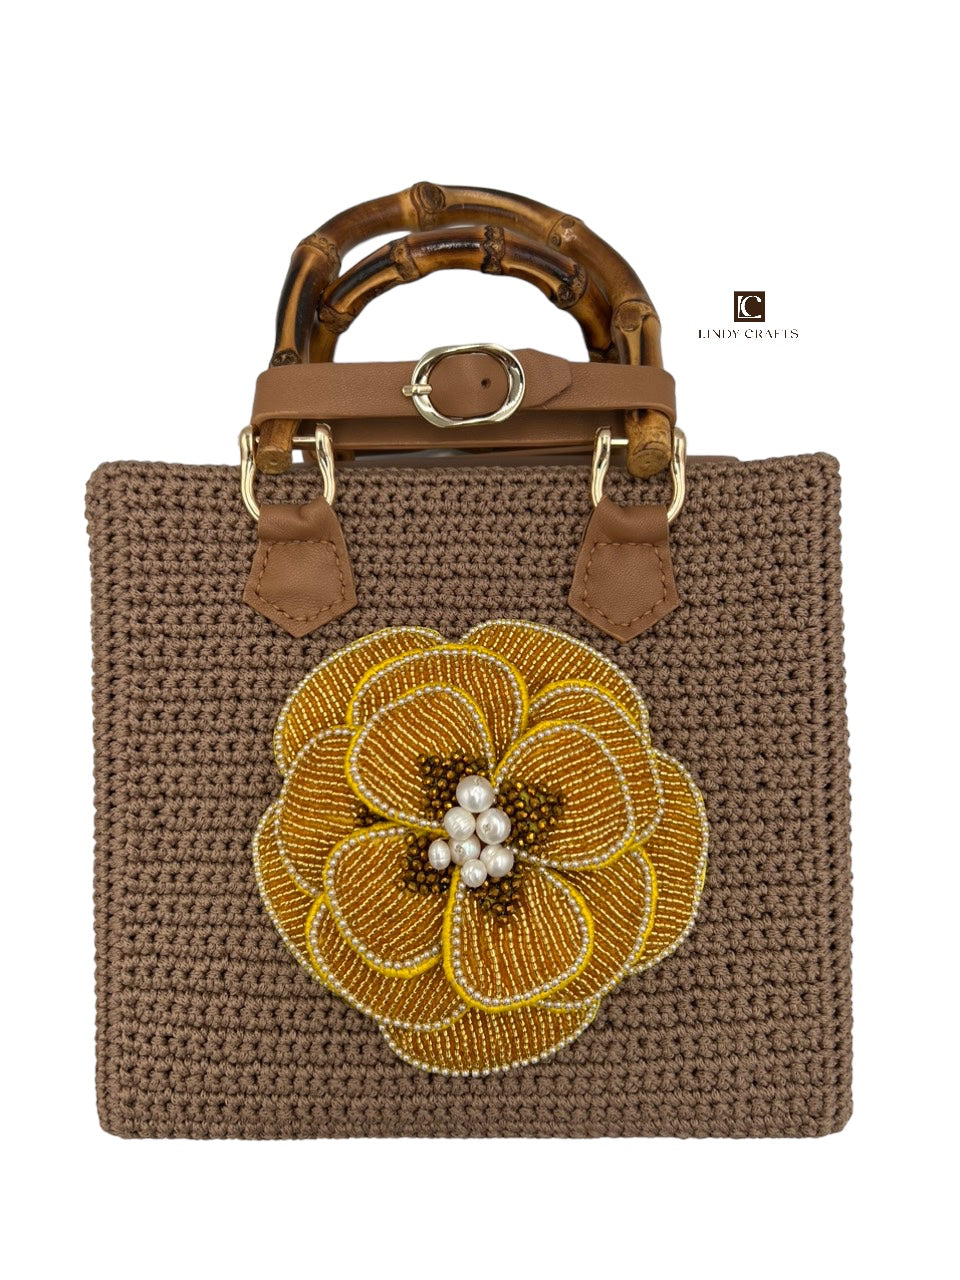 Luxurious and Elegant Bag